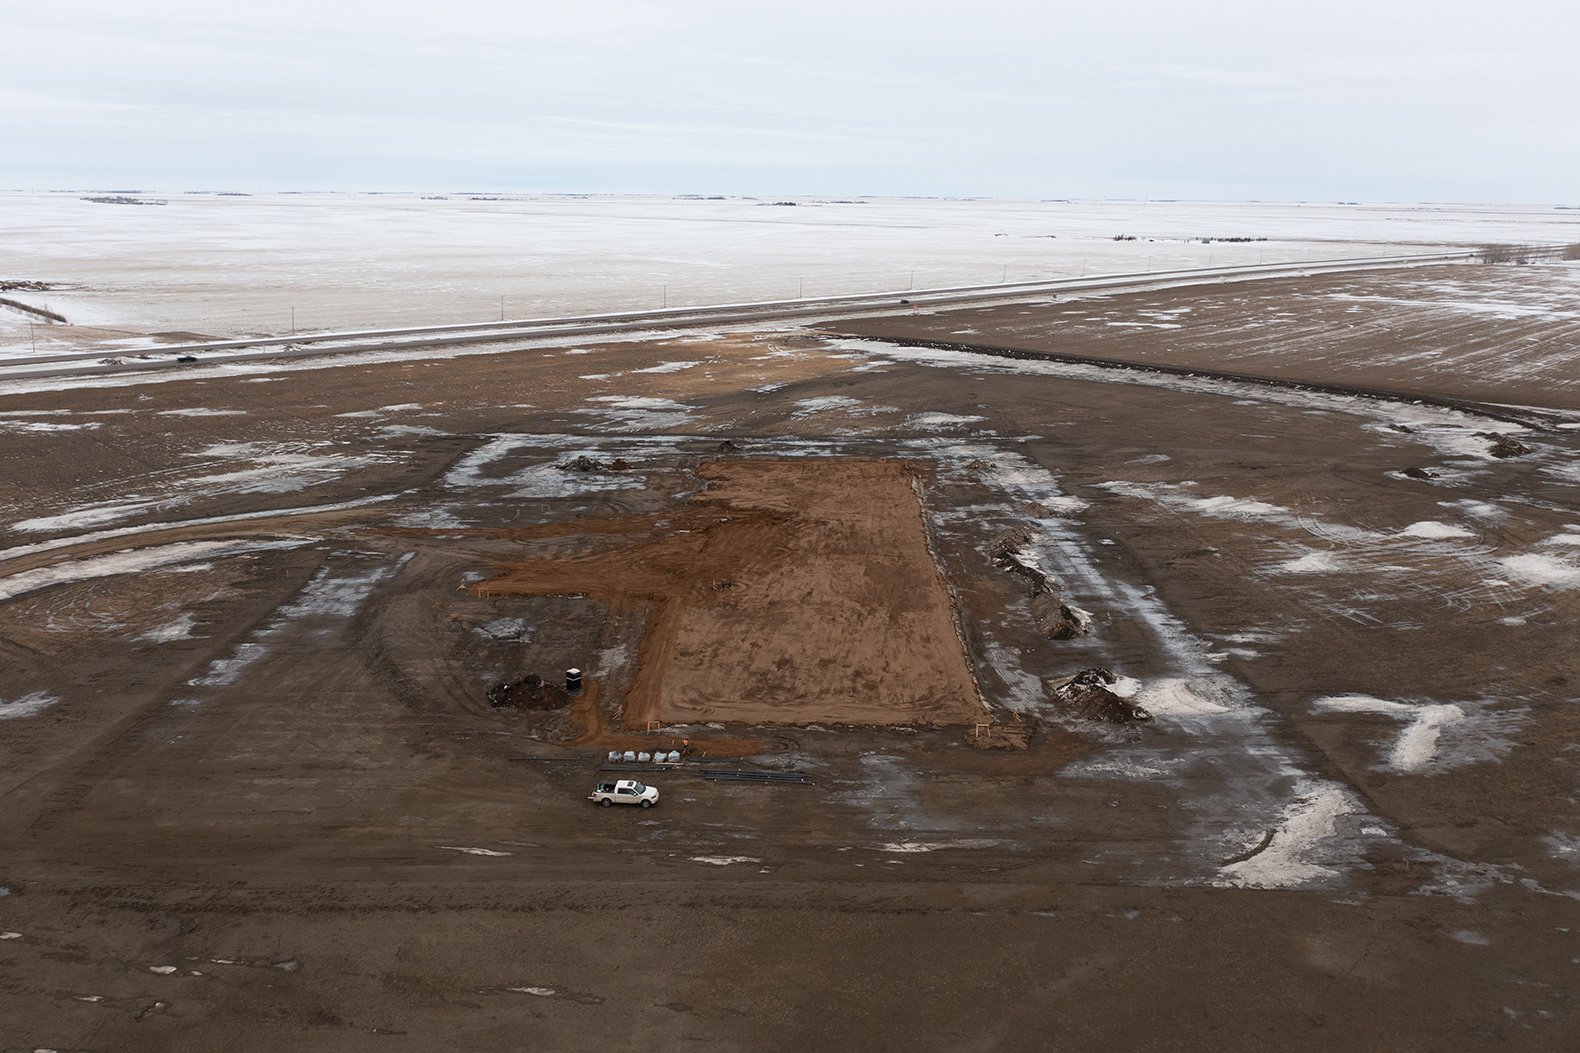 Drone Services for Construction Sites in Saskatchewan